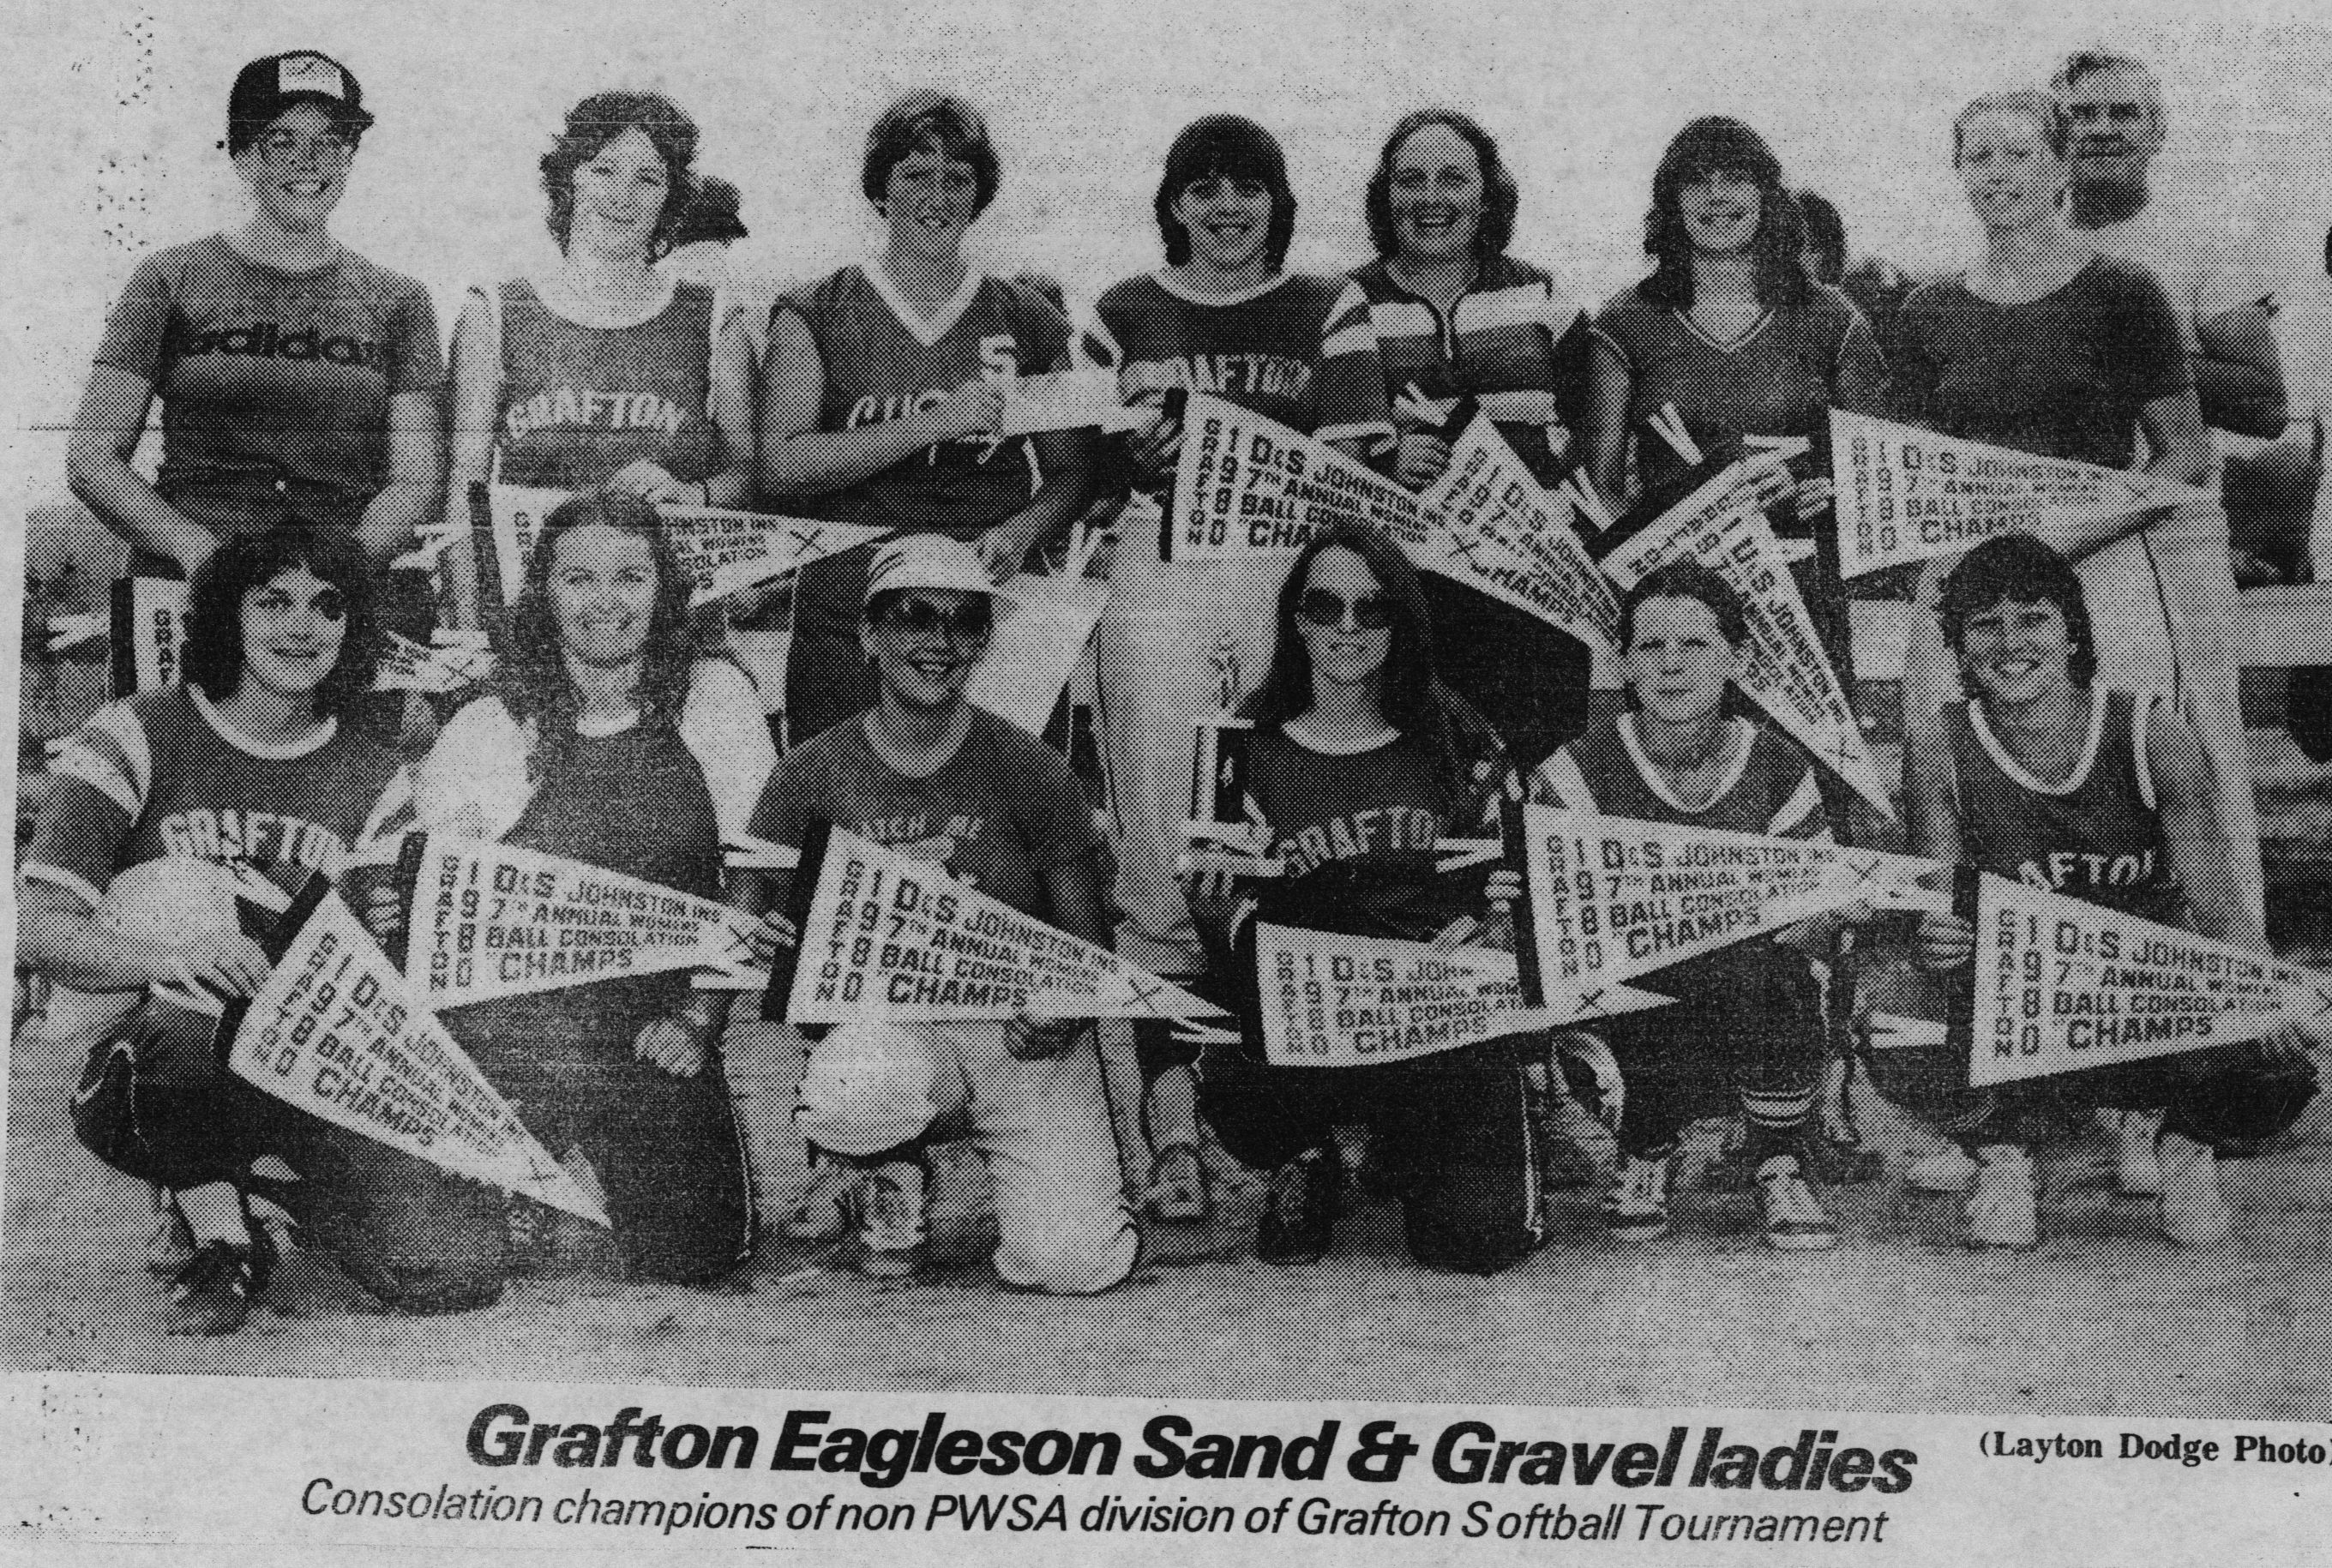 Softball -Grafton Tournament -1980 -Ladies-Non PWSA Cons Champs - Grafton Eagleson and Sand